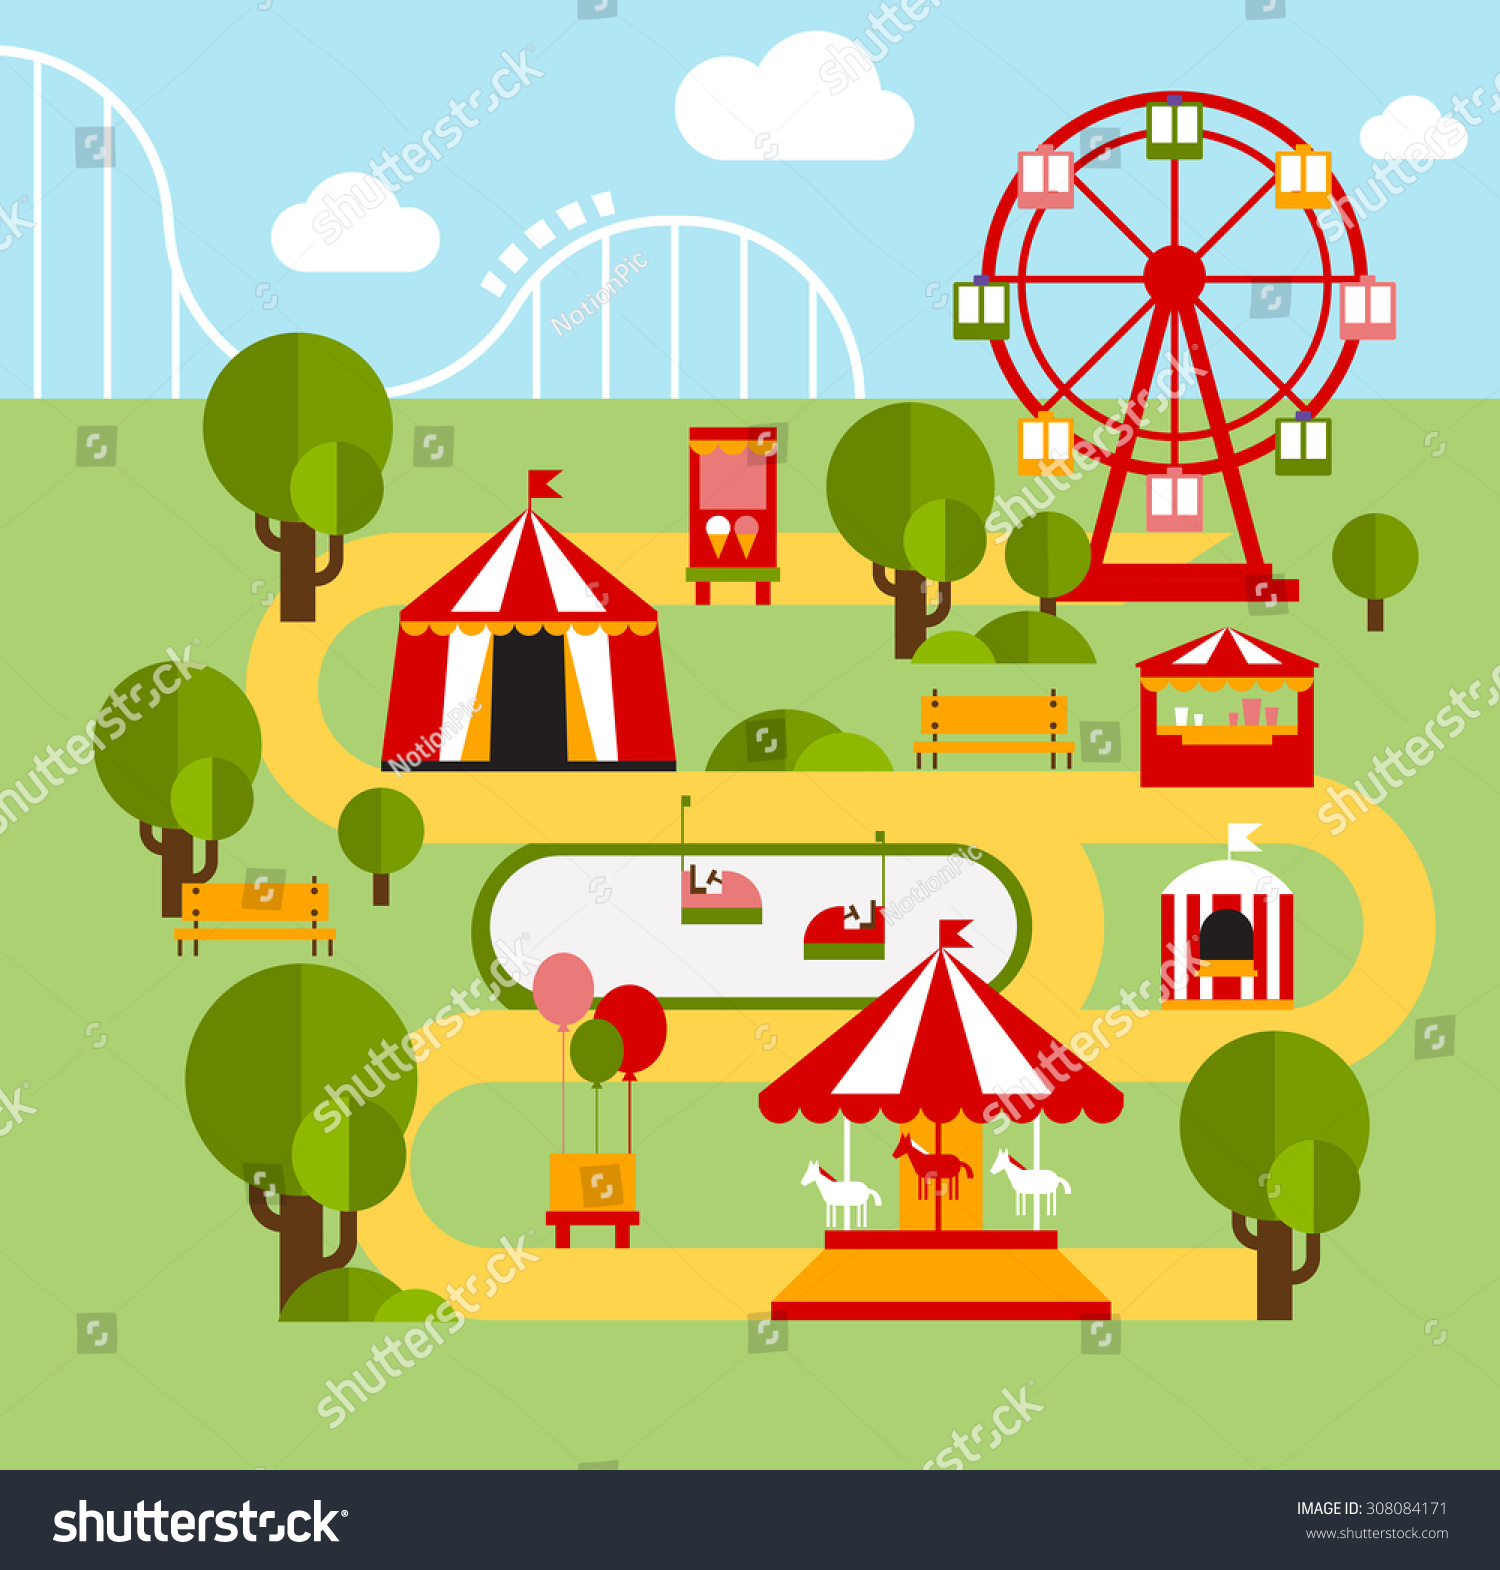 Amusement Park Infographic Elements Vector Illustration Stock Vector ...